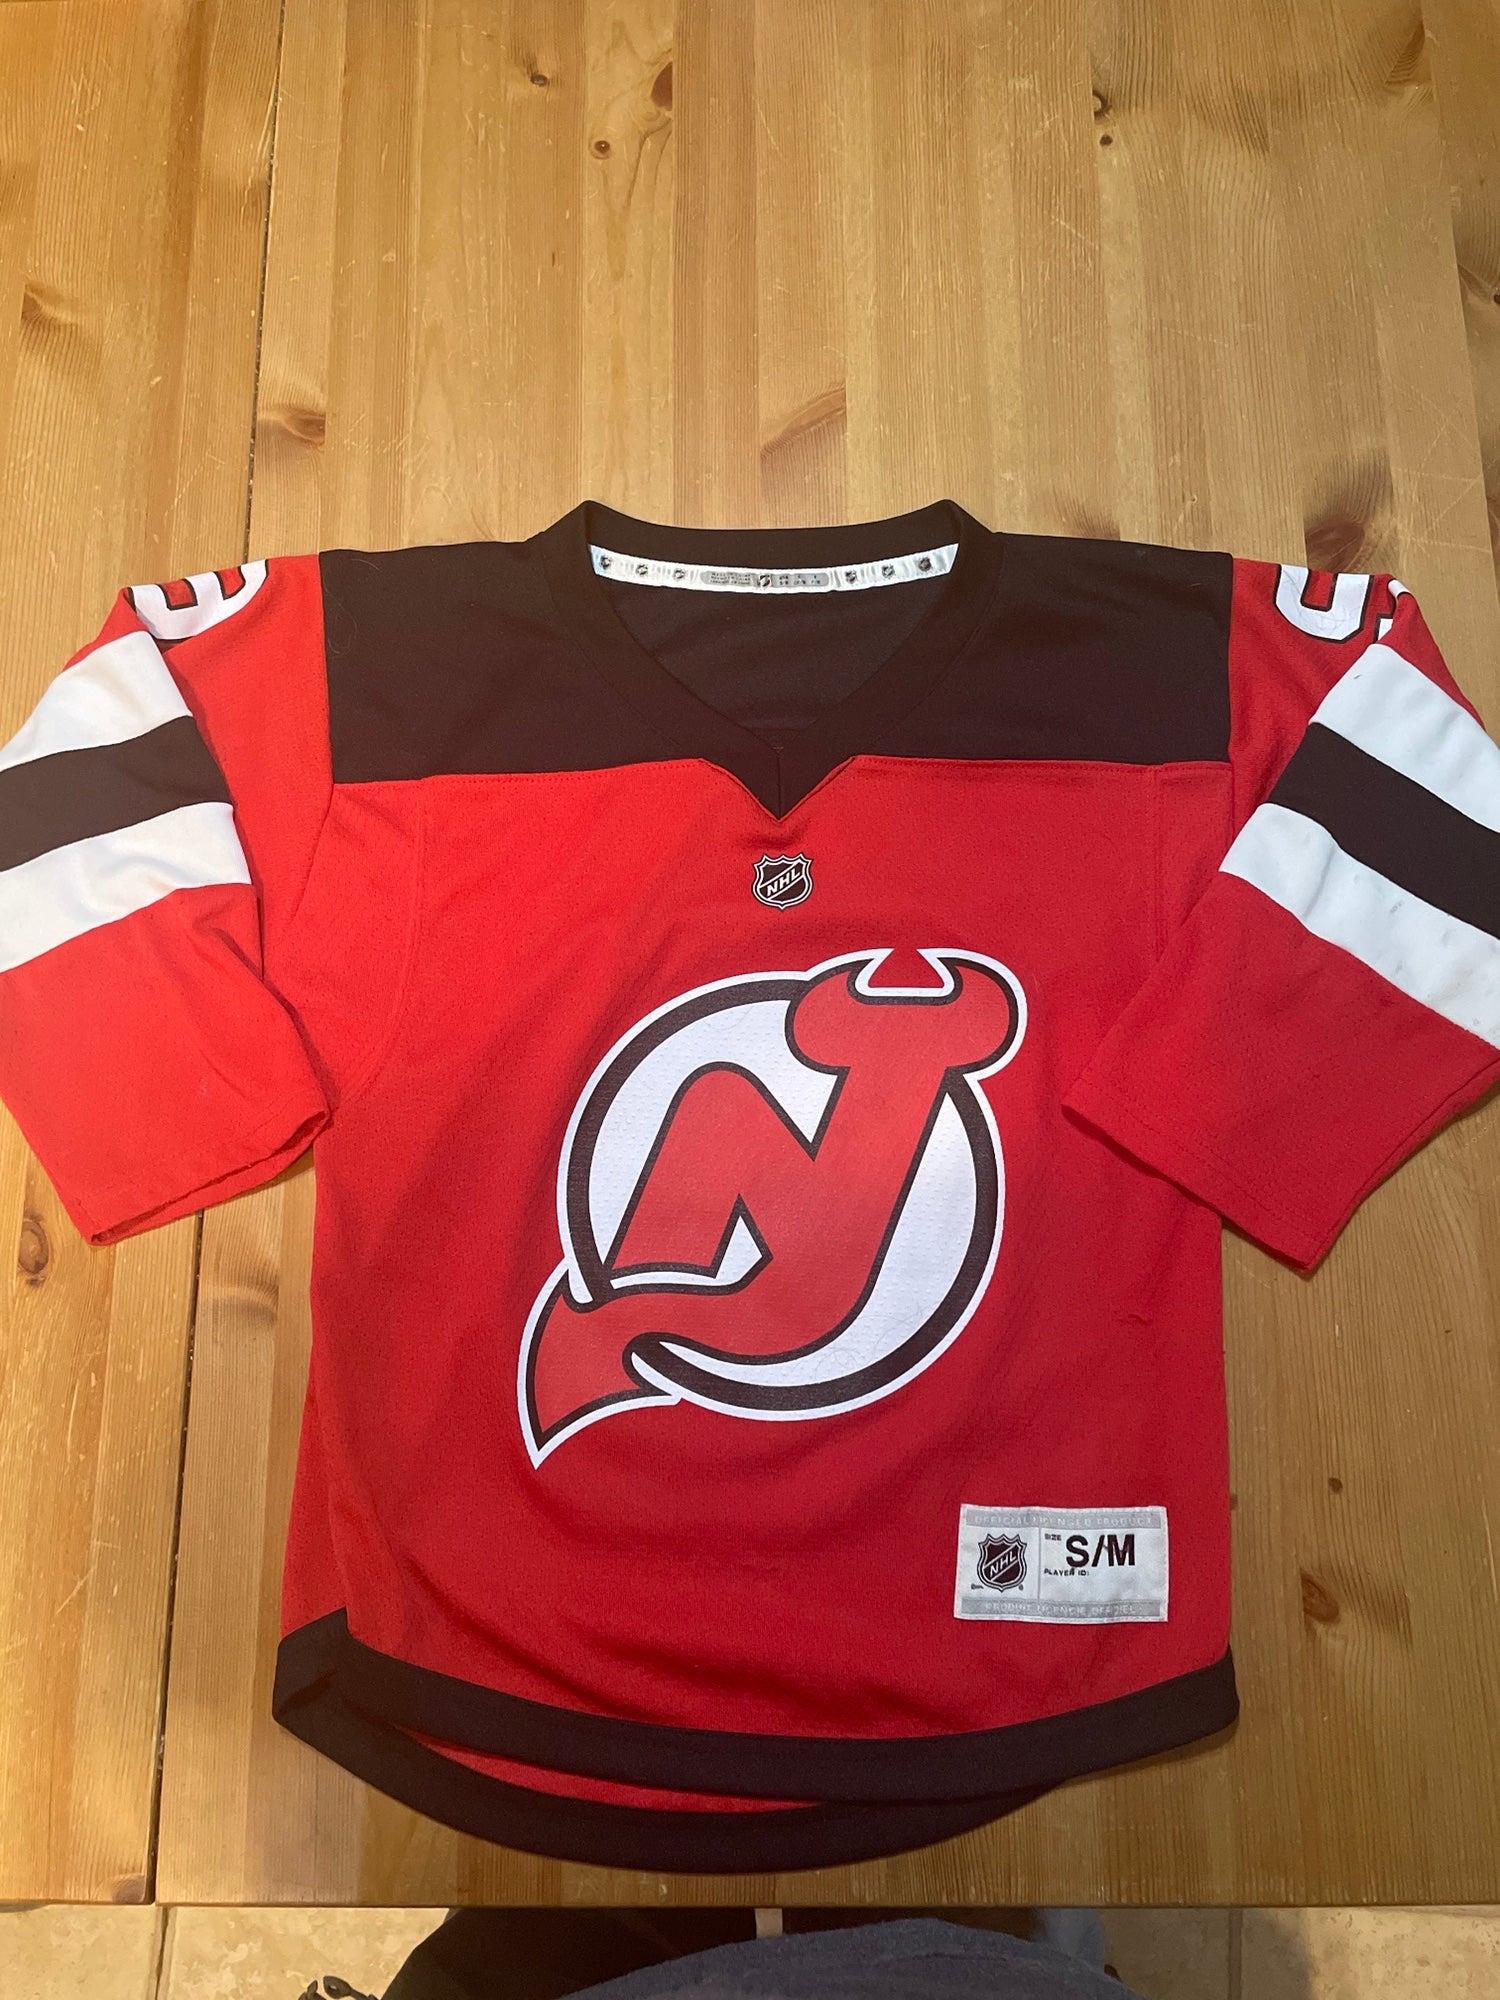 New Jersey Devils replica jersey